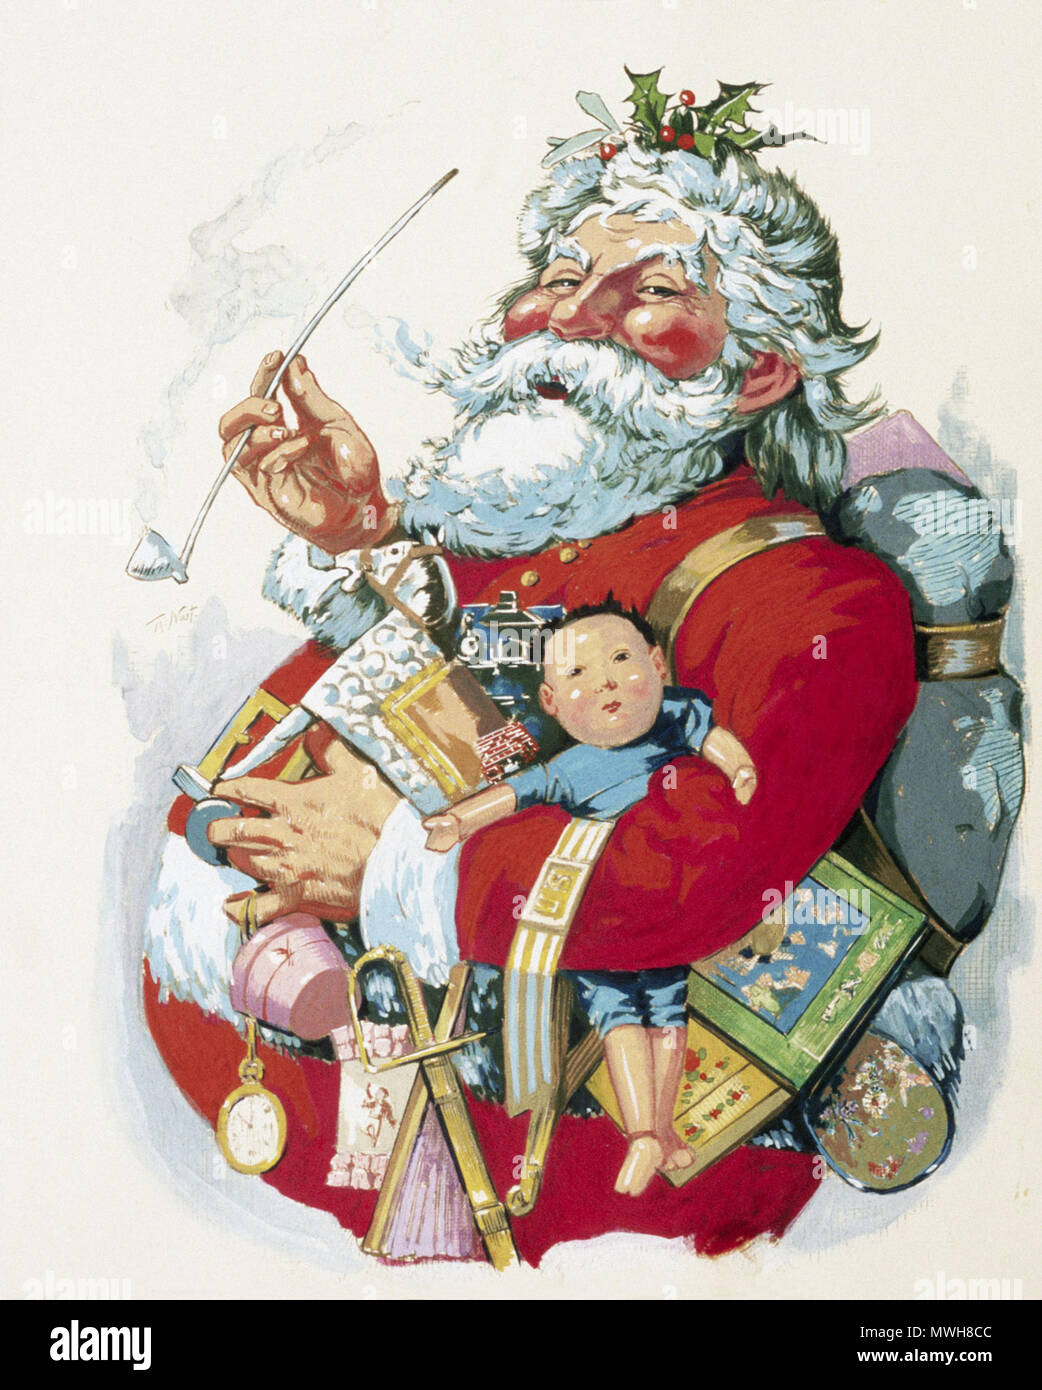 . Englisch: Merry Old Santa Claus von Thomas Nast. 1863. Thomas Nast413 Merry Old Santa Claus von Thomas Nast Stockfoto